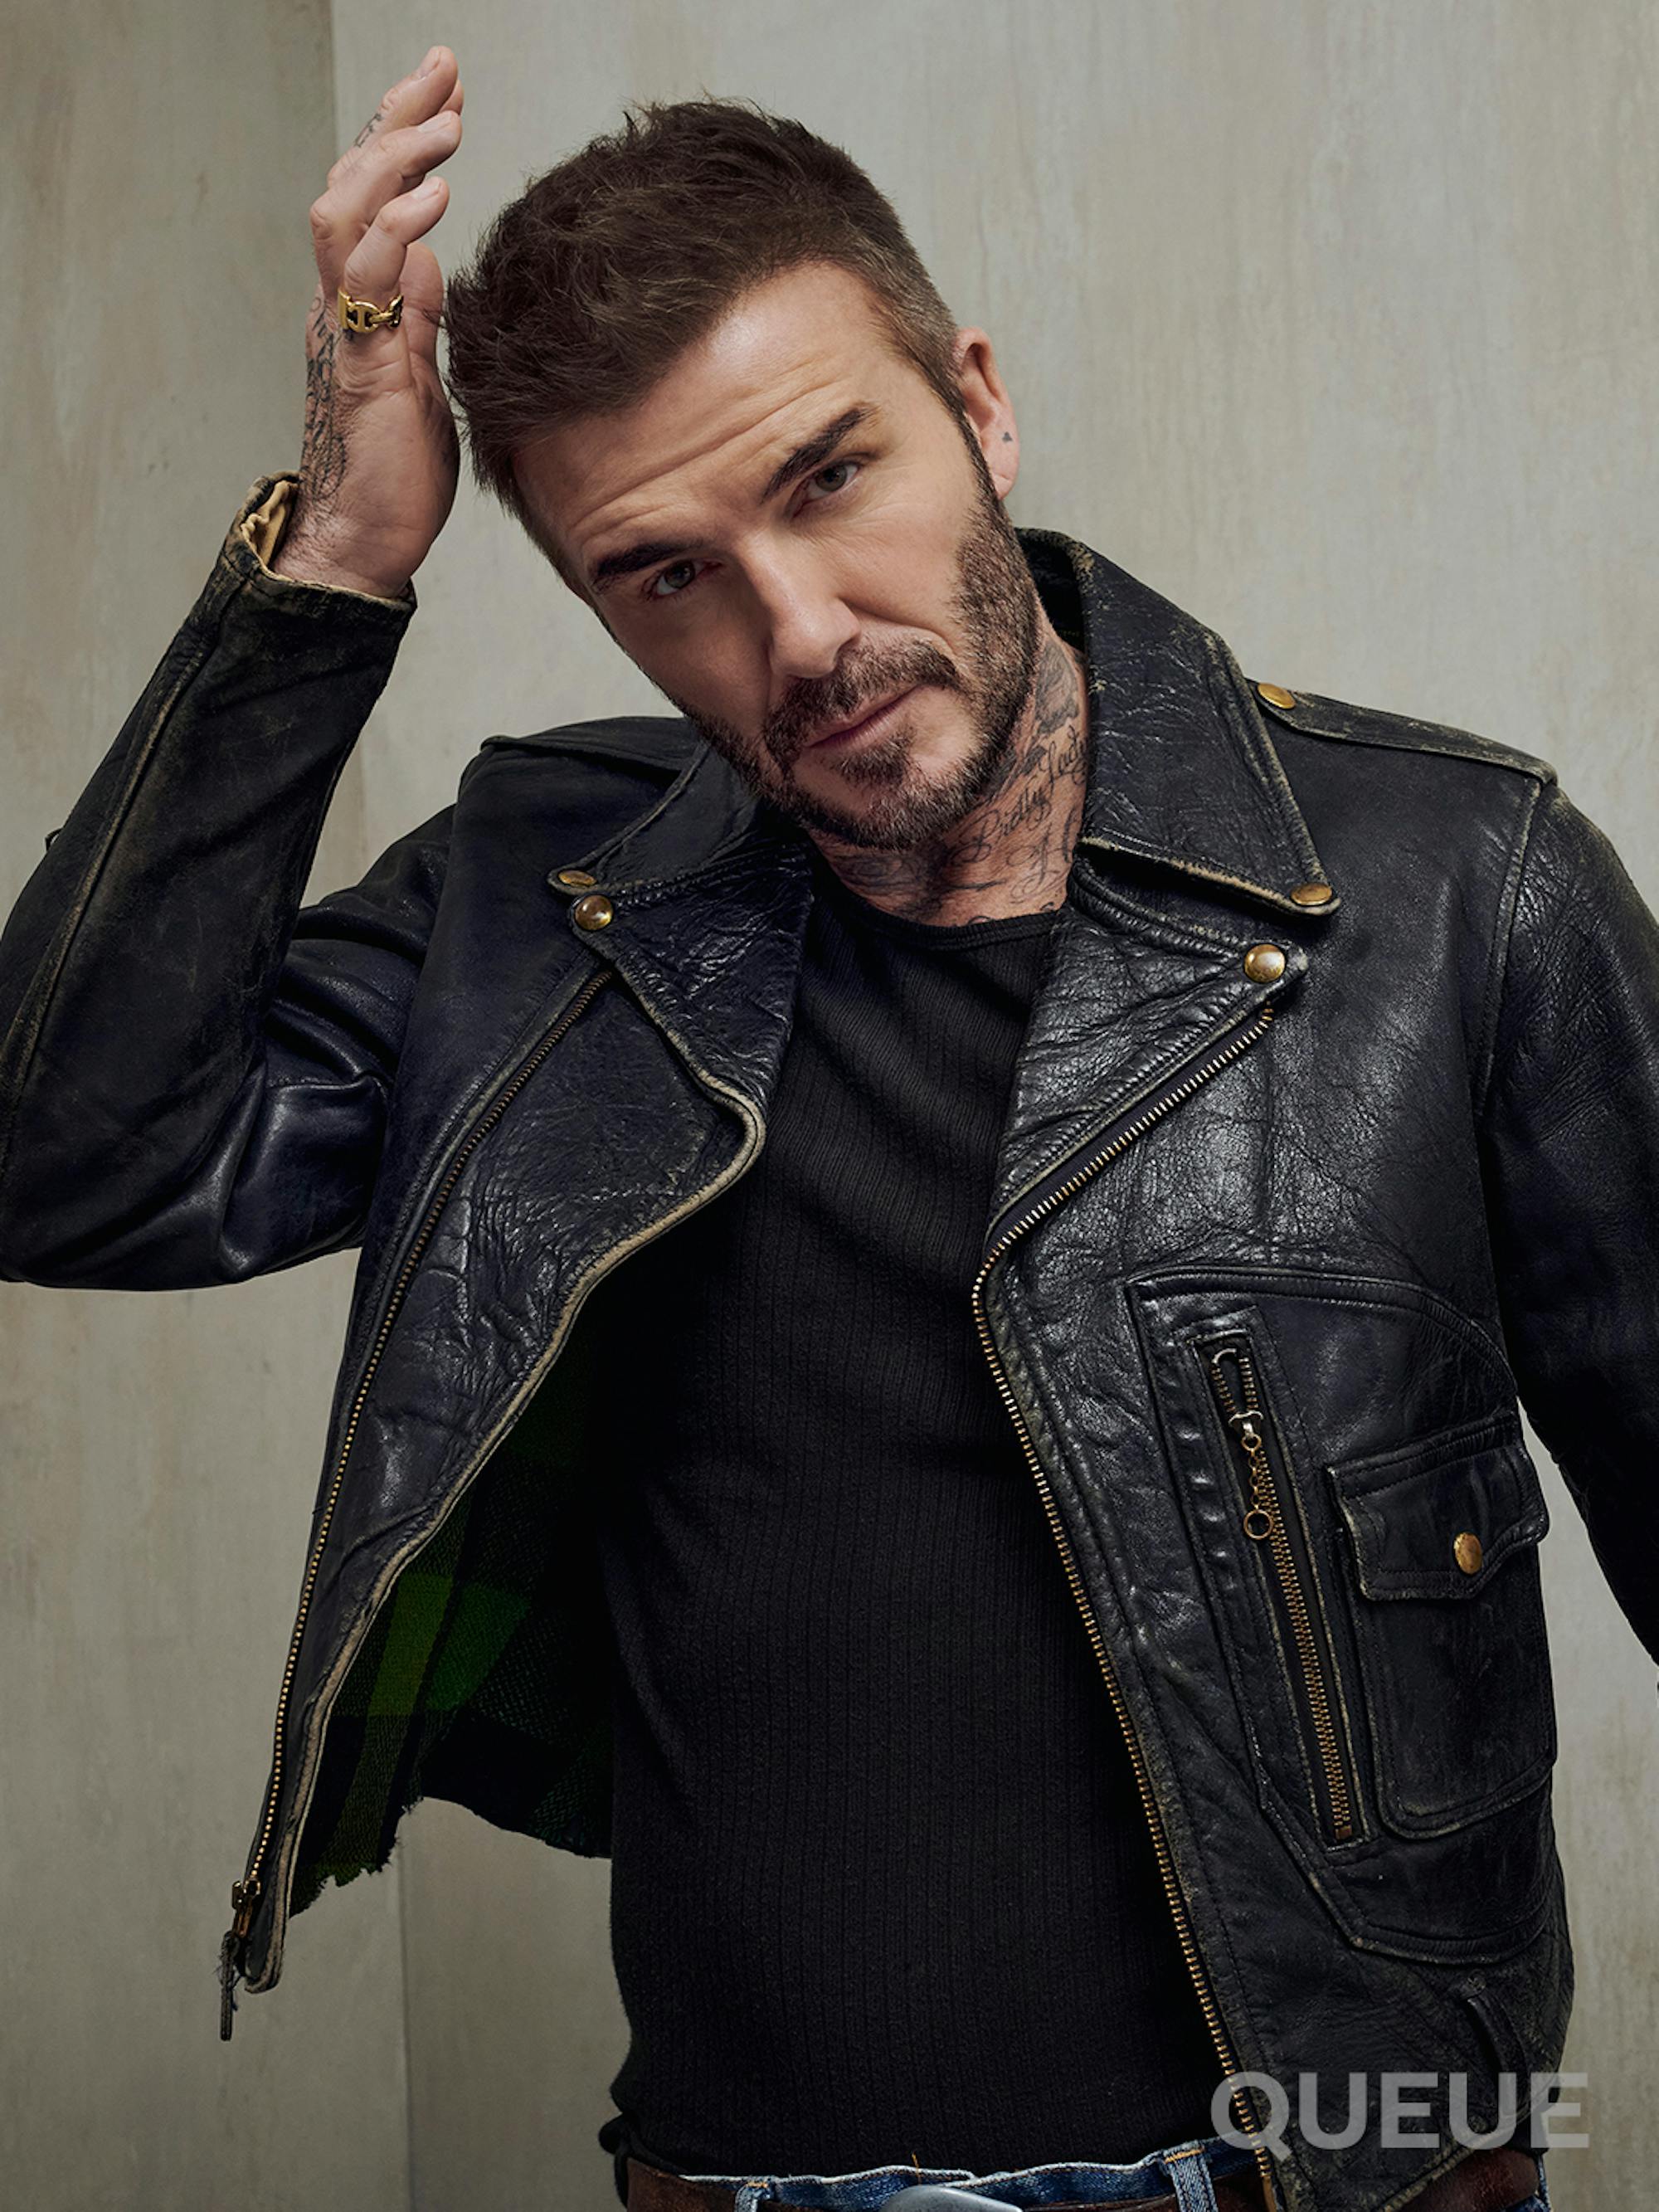 David Beckham wears a black shirt under a black leather jacket.